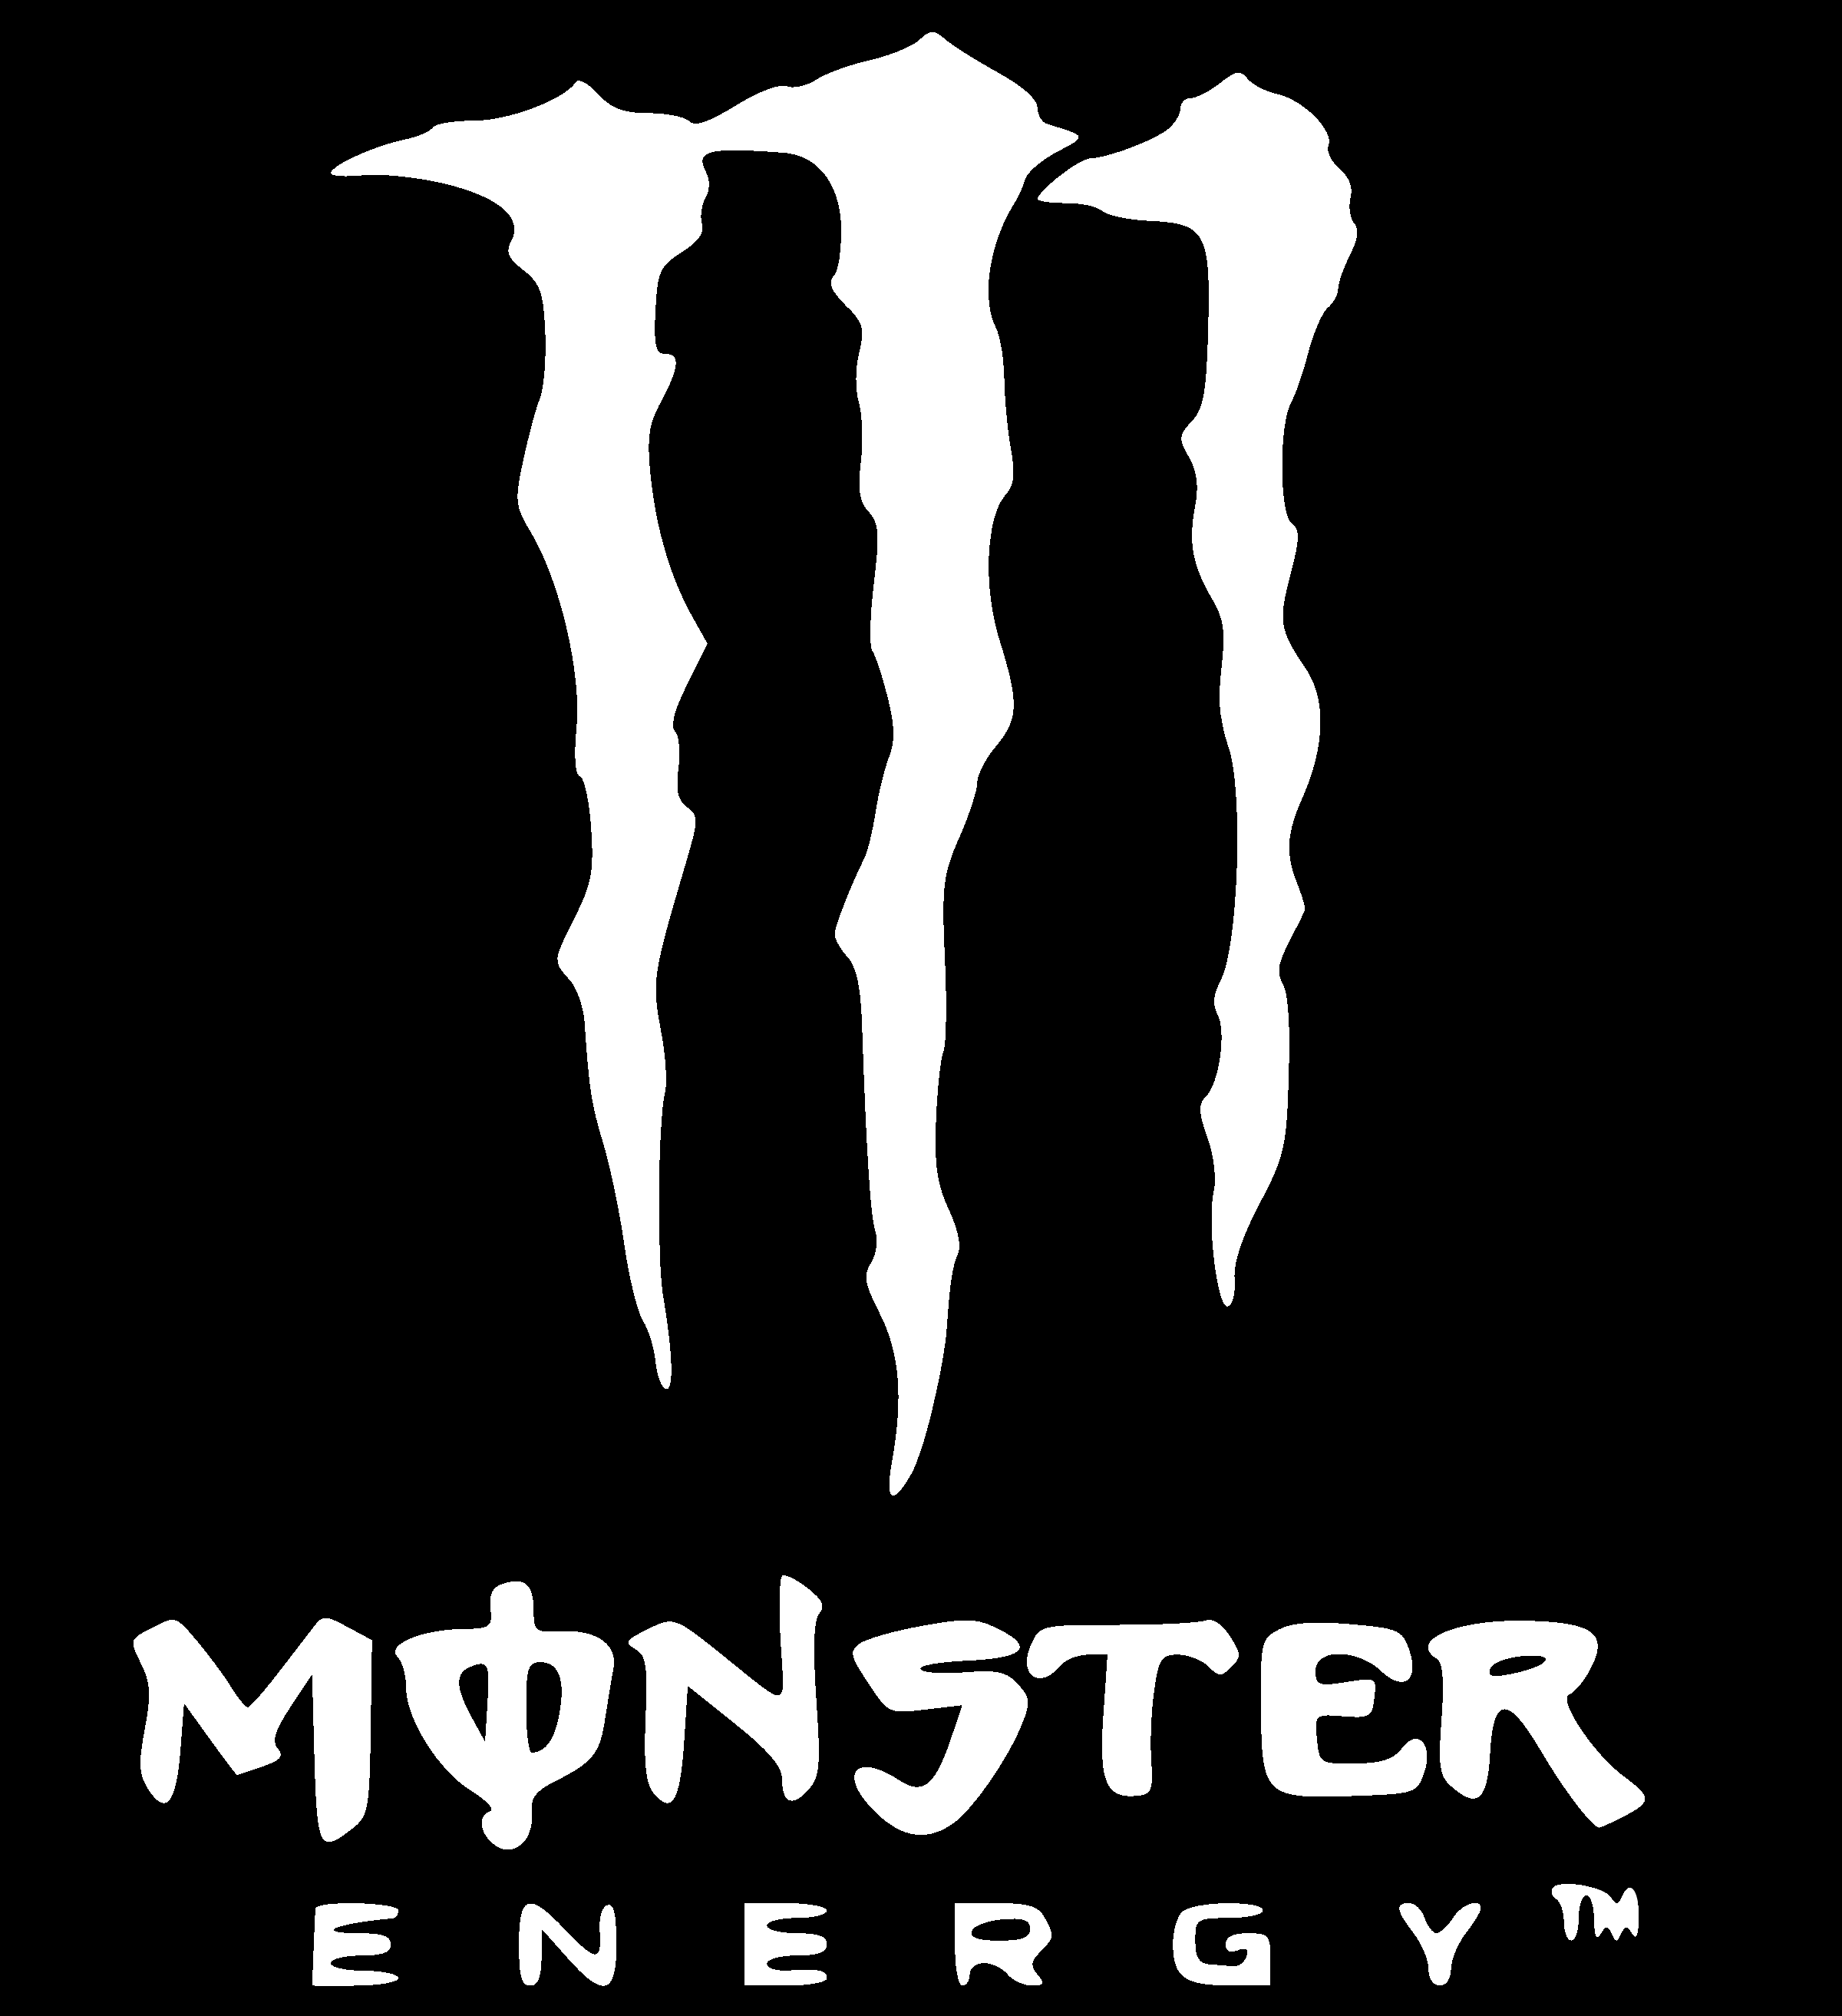 Black and White Monster Logo - Monster Energy Logo PNG Transparent & SVG Vector - Freebie Supply